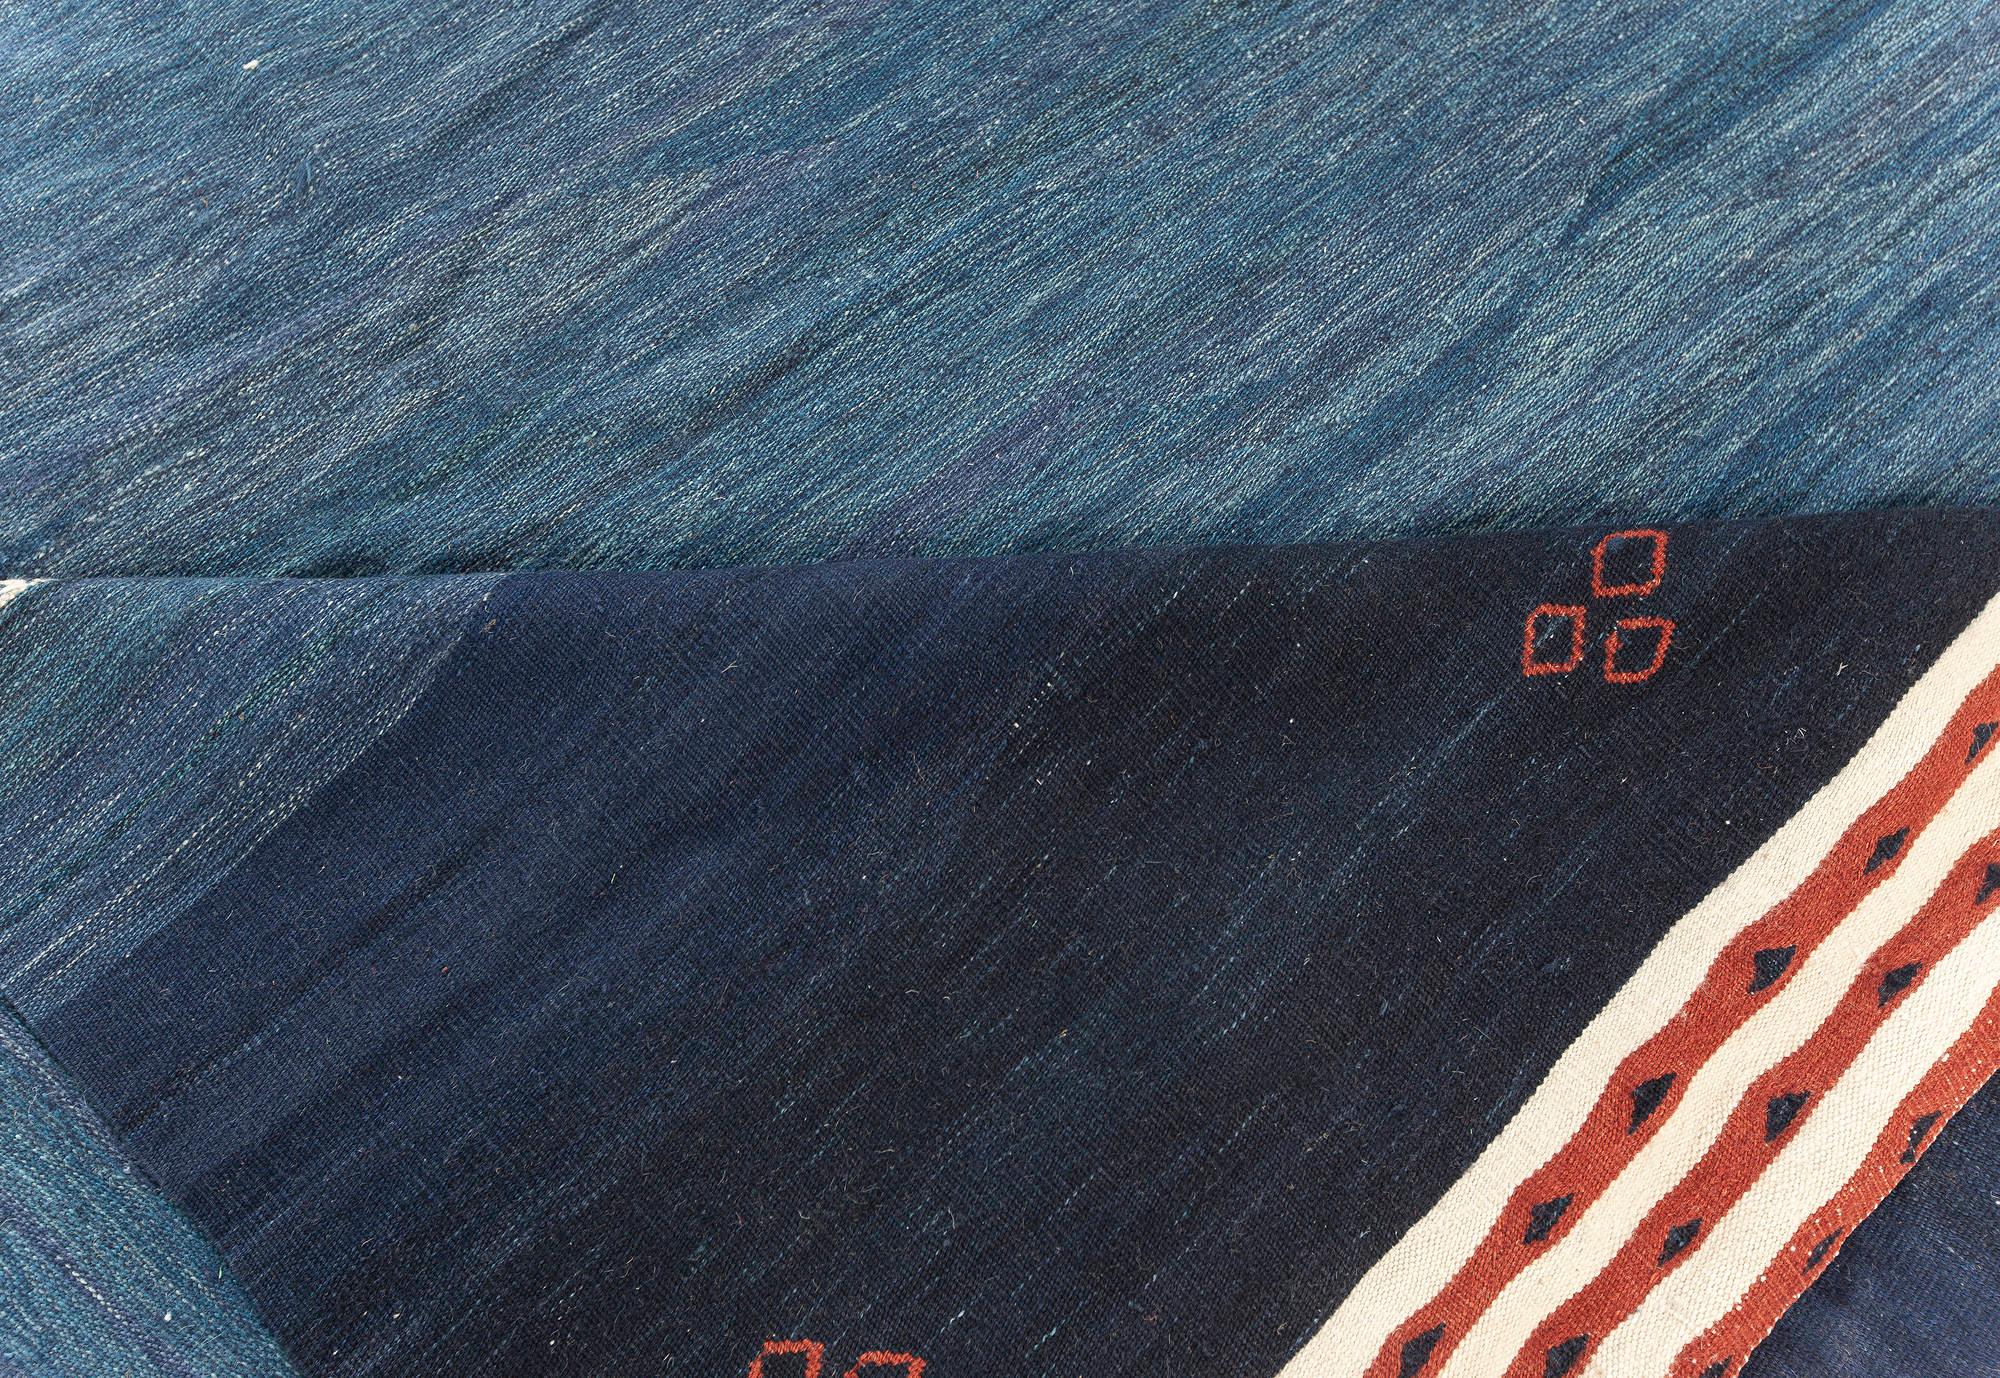 Contemporary blue Kilim rug by Doris Leslie Blau
Size: 10'0